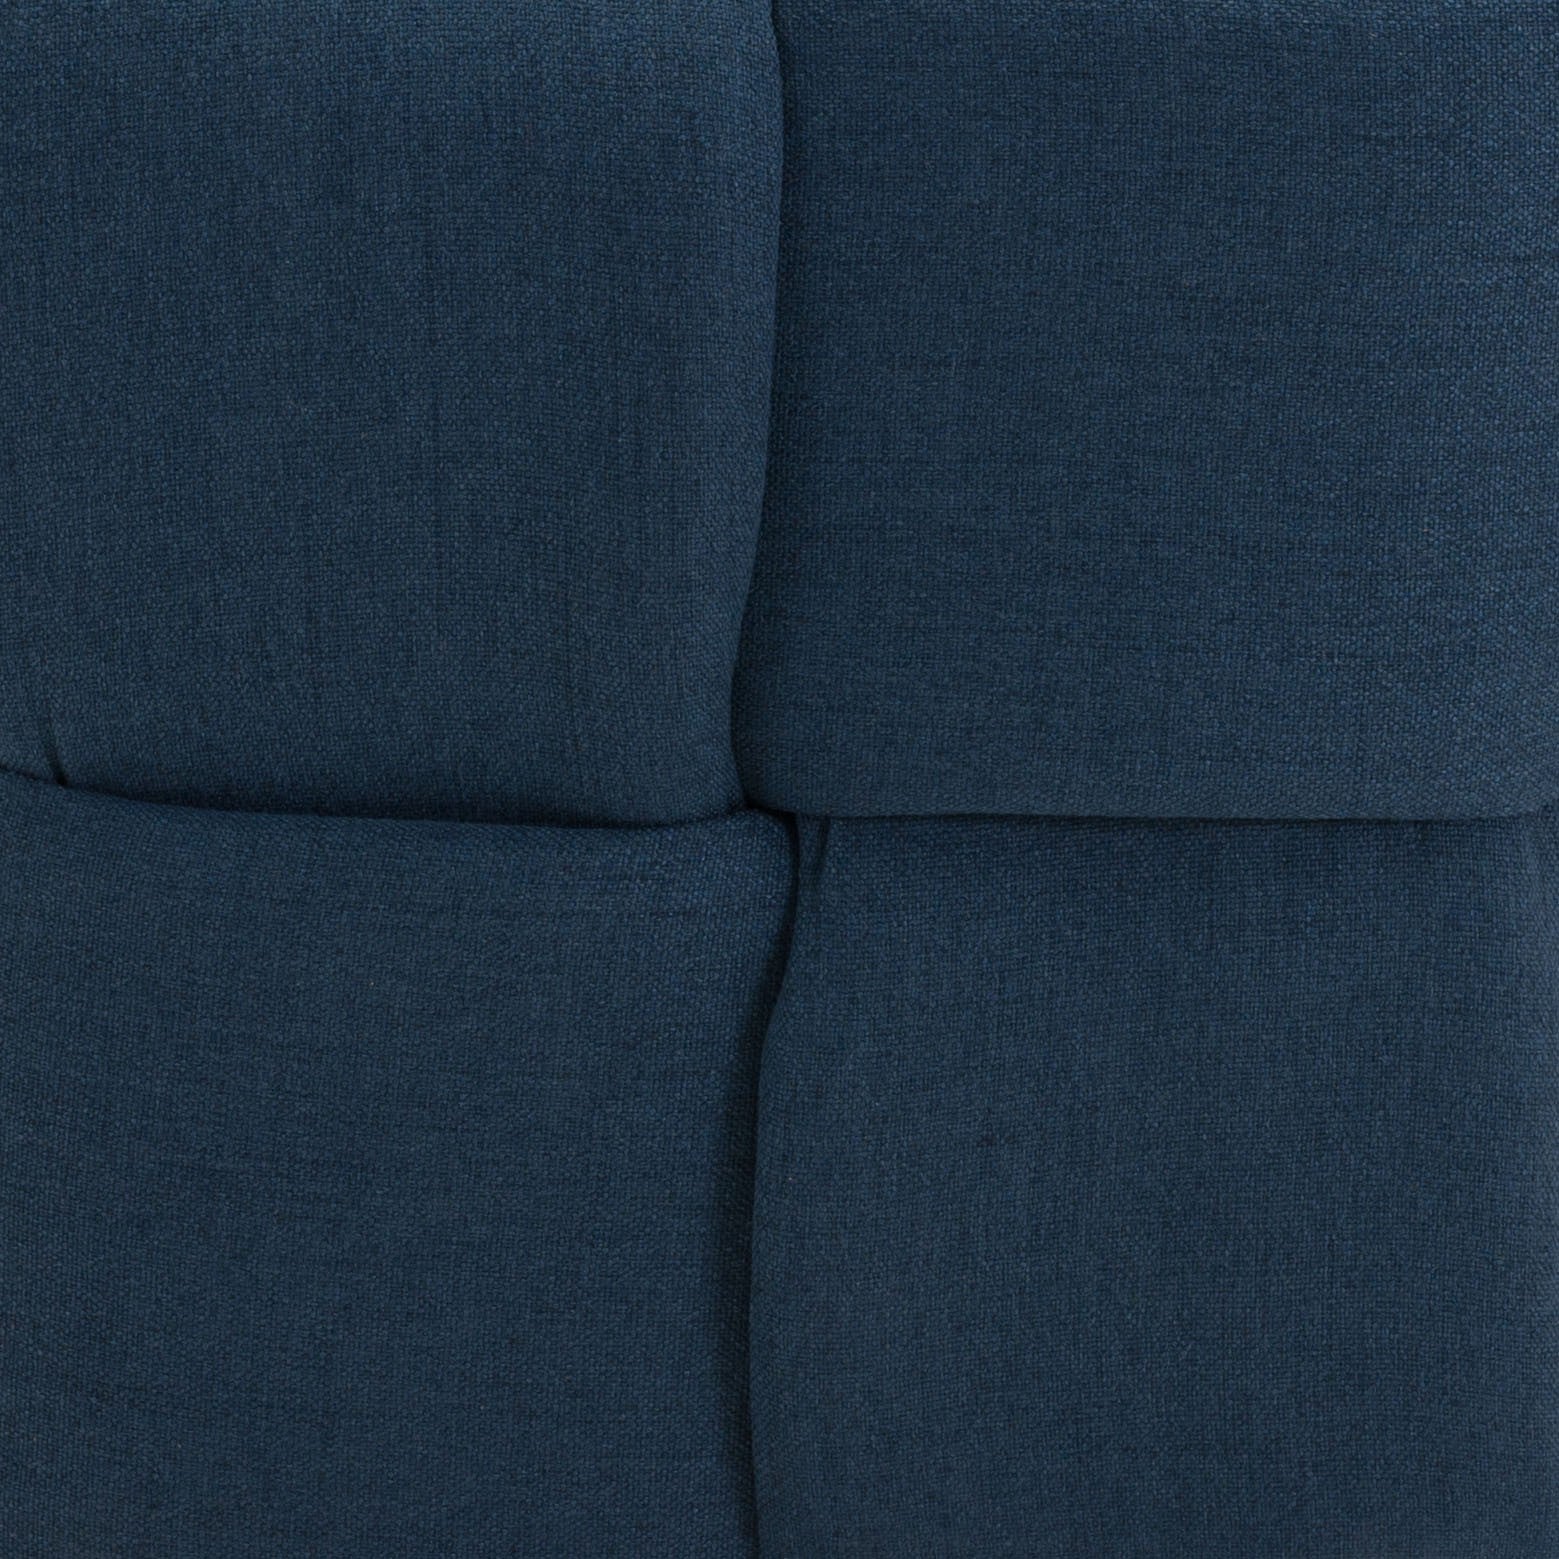 20" Dark Blue Swivel Backless Chair